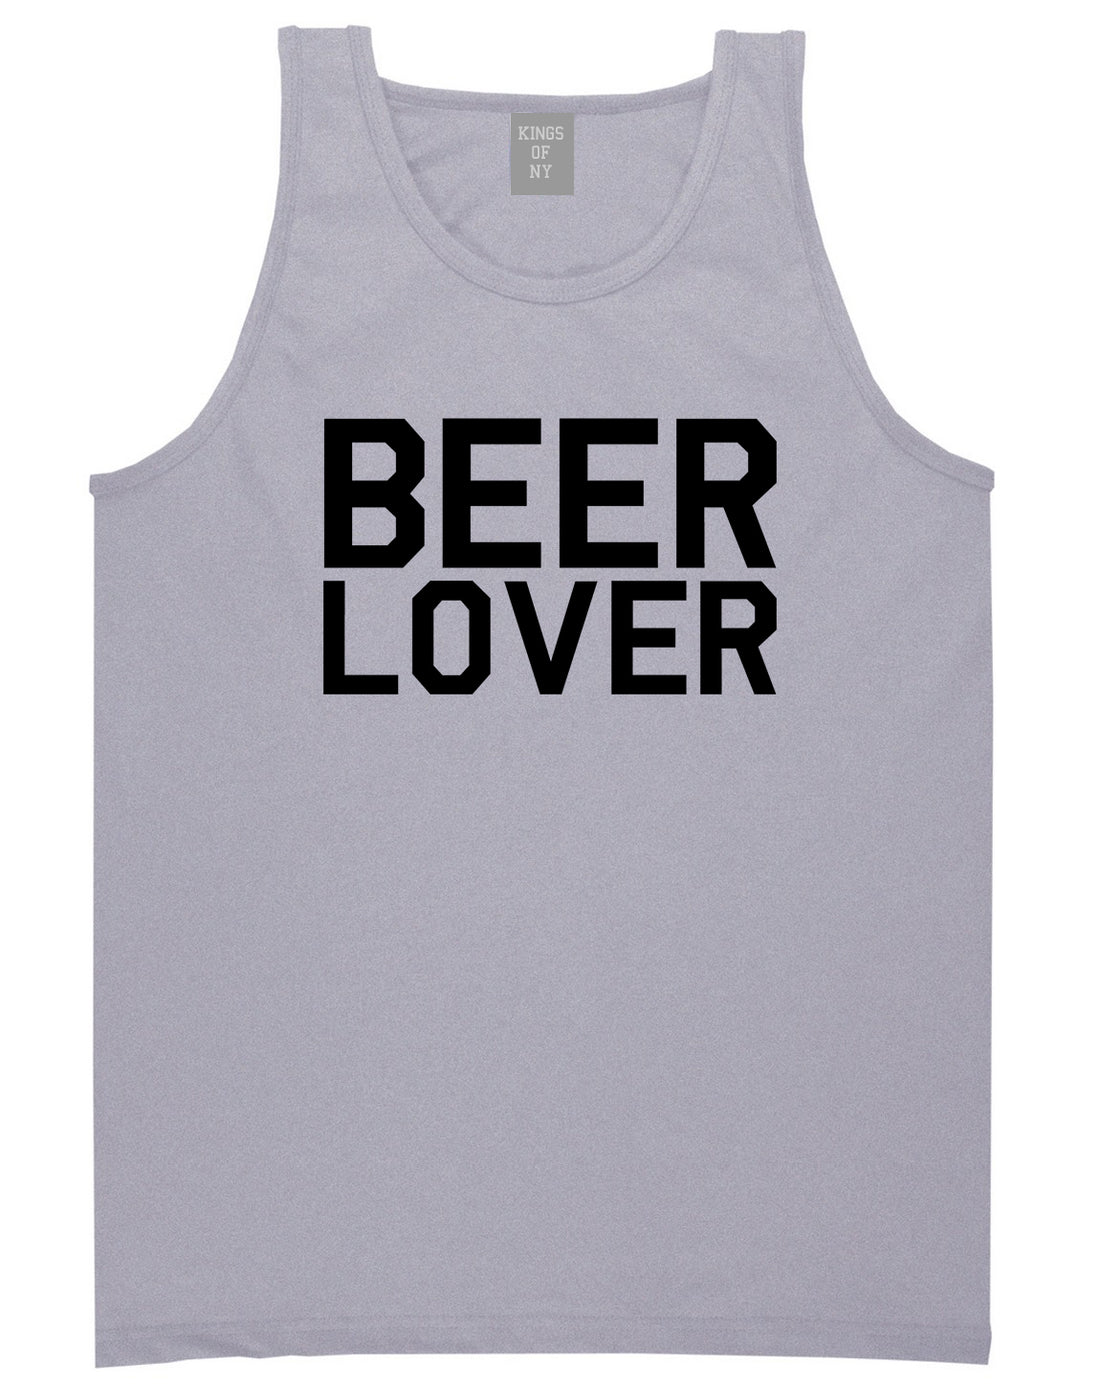 Beer_Lover_Drinking Mens Grey Tank Top Shirt by Kings Of NY